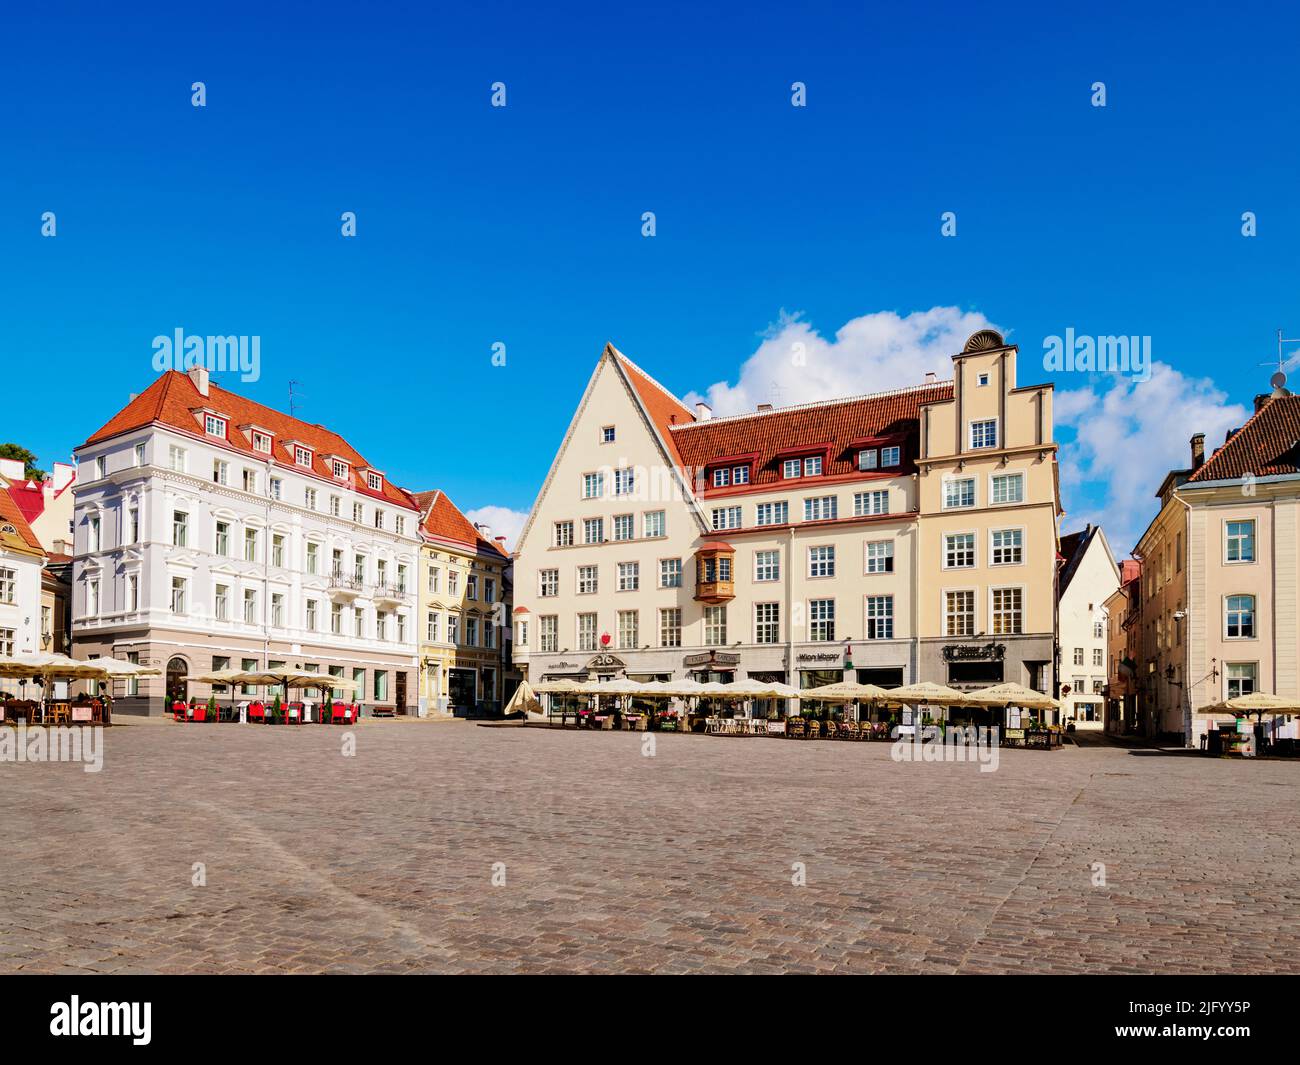 Raekoja plats, Old Town Market Square, UNESCO World Heritage Site, Tallinn, Estonia, Europe Stock Photo